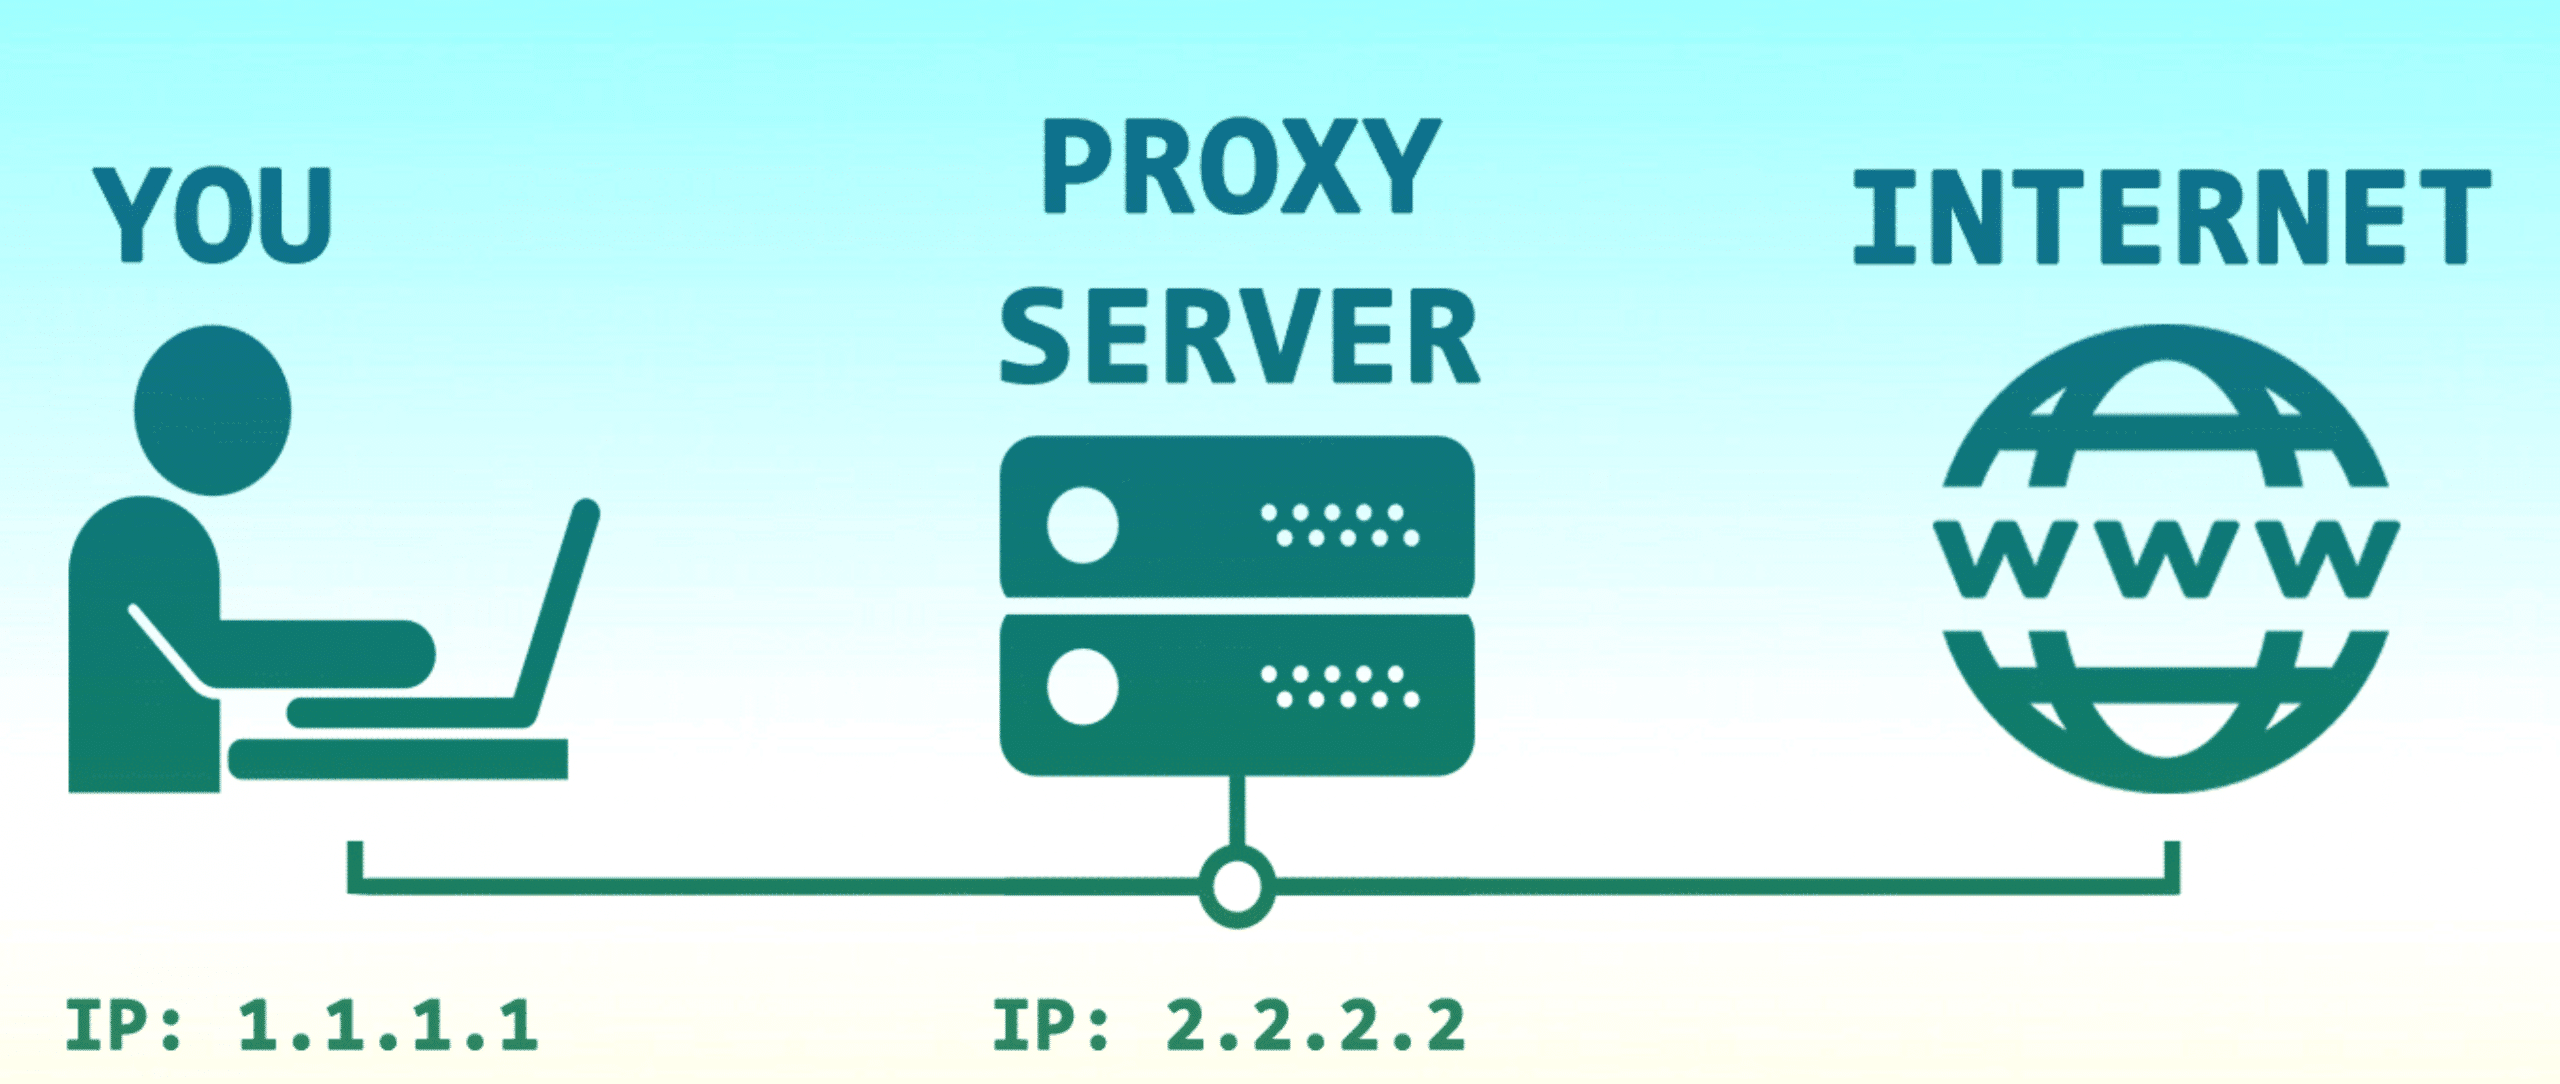 proxy server internet infographic